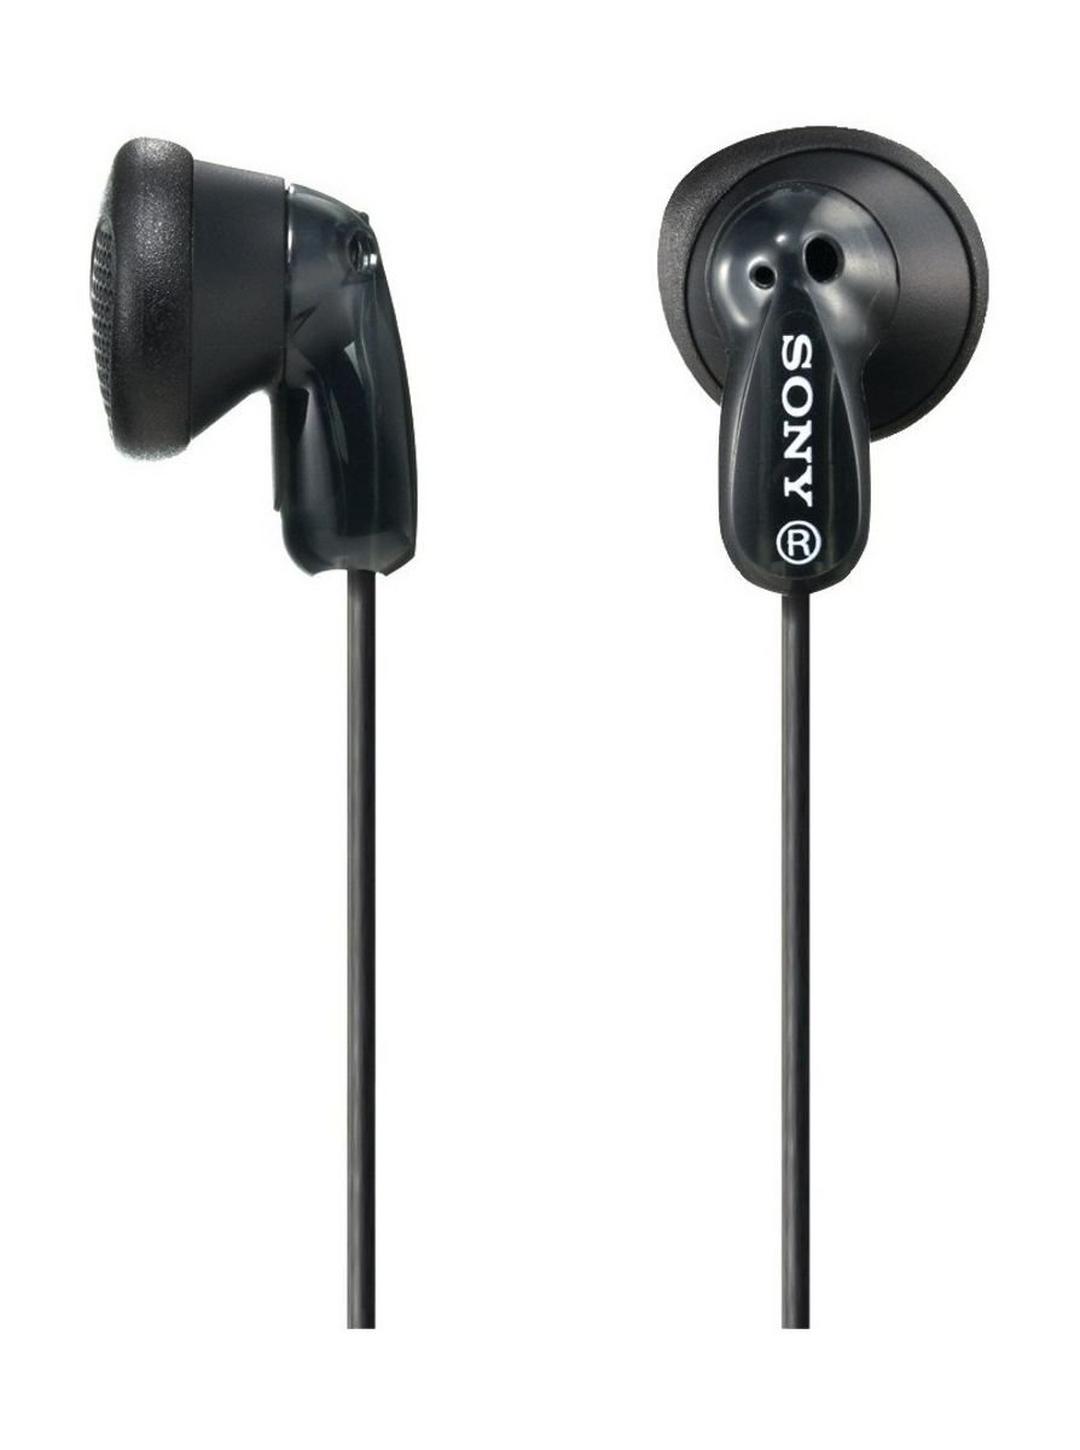 Sony E Series In-ear Headphones (MDR-E9LP) - Black